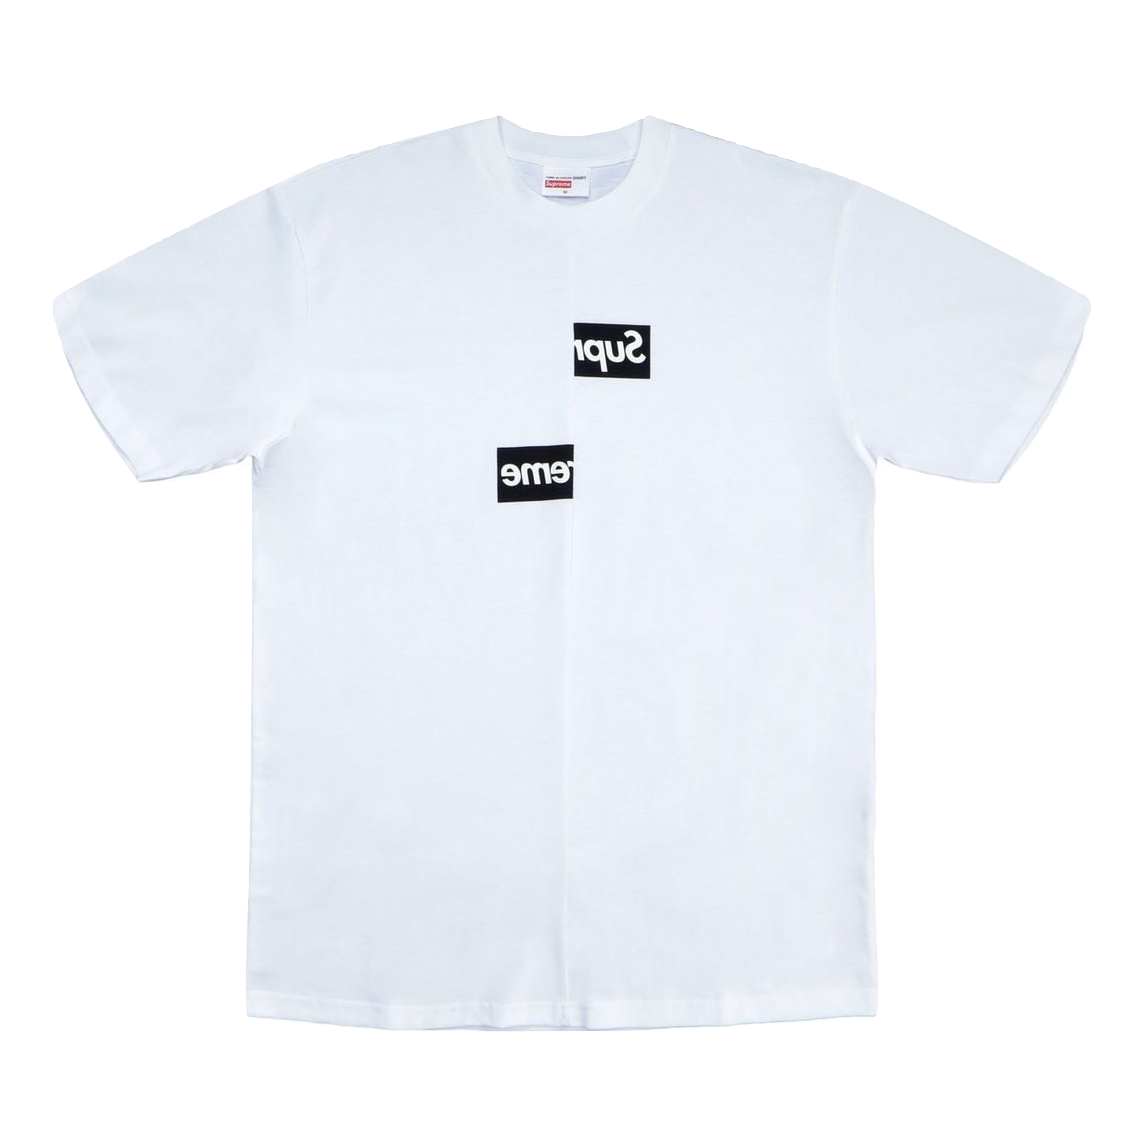 Supreme x CDG (Comme De Garcons) Shirt Split Box Logo Tee - White - Used